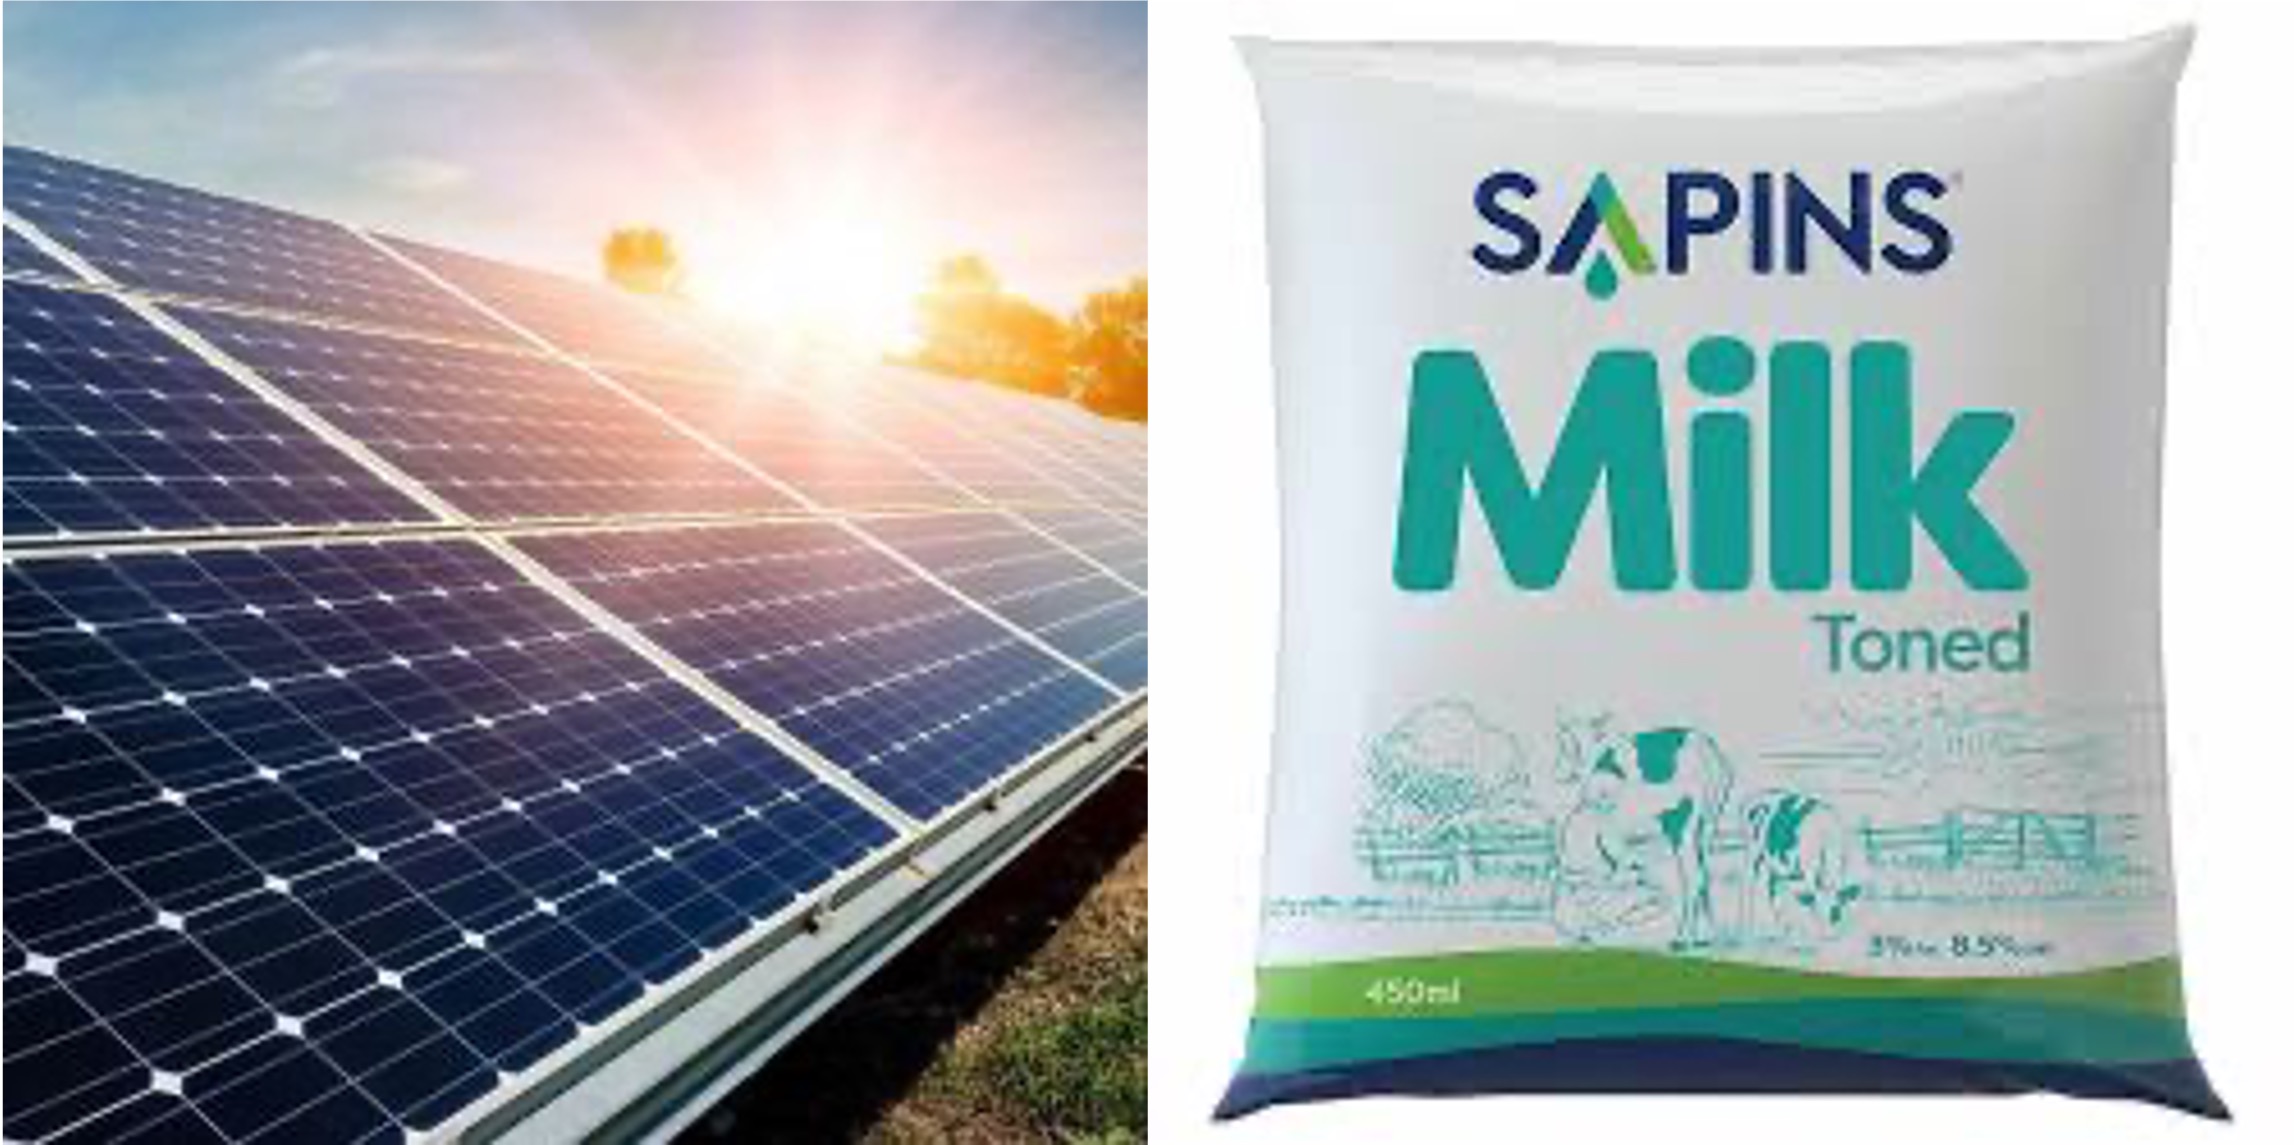 solar powered sapins milk dairynews7x7